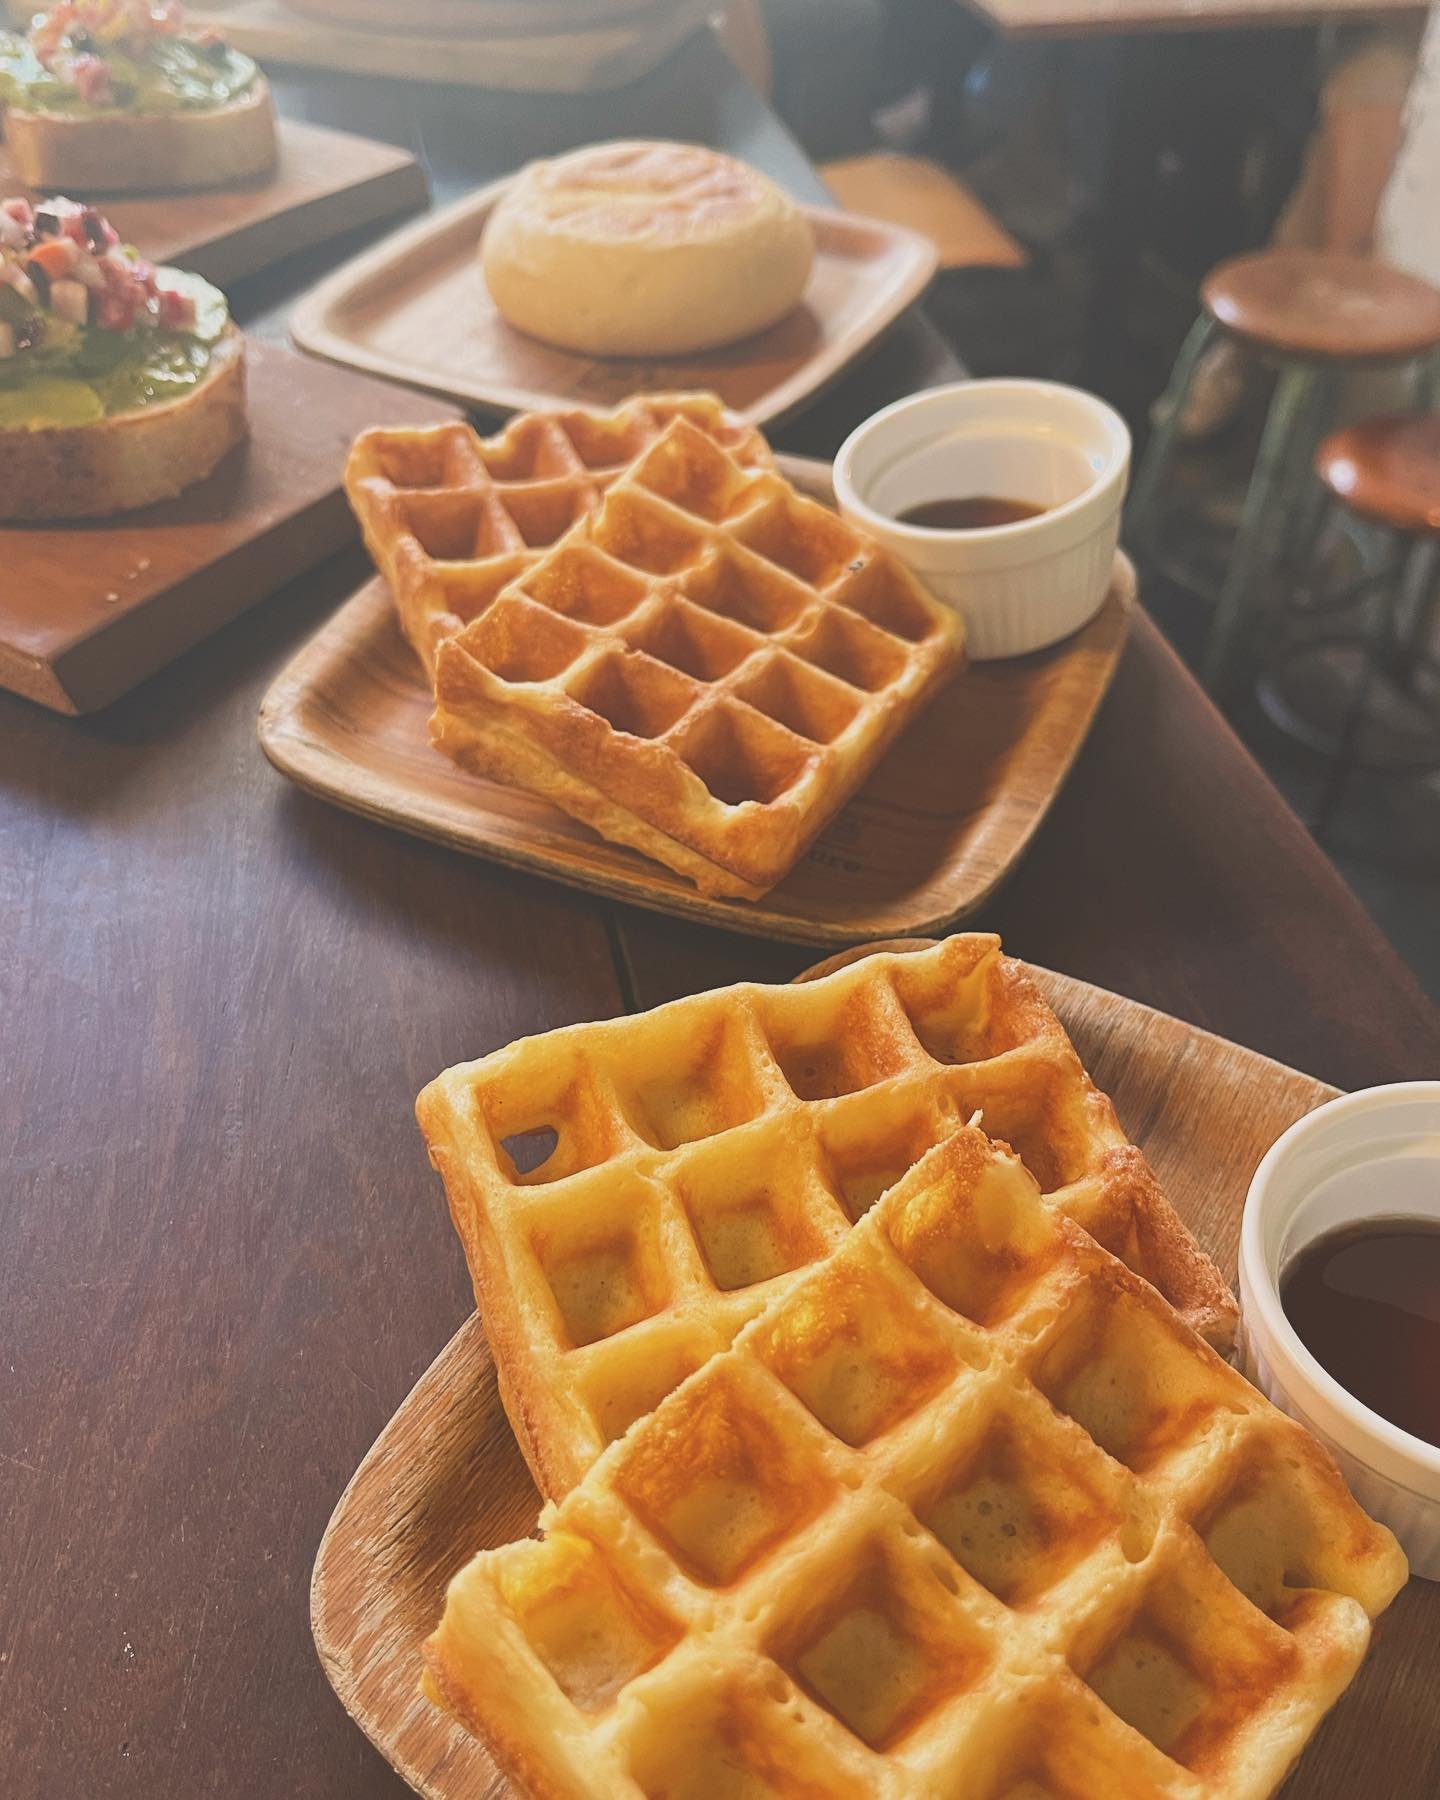 🧇🧇🍳✨
GWもsuke6 dinerは元気に営業しております。
皆様のご来店、心よりお待ちしております。

#asakusa #sukerokudiner #suke6diner #morning  #breakfast #brunch #brunchtime #lunch #omlette #diner #cafe #pastry #coffee #gourmet 
#tokyo #tokyogourmet #asakusatokyo #tourism #tourist #浅草モーニン